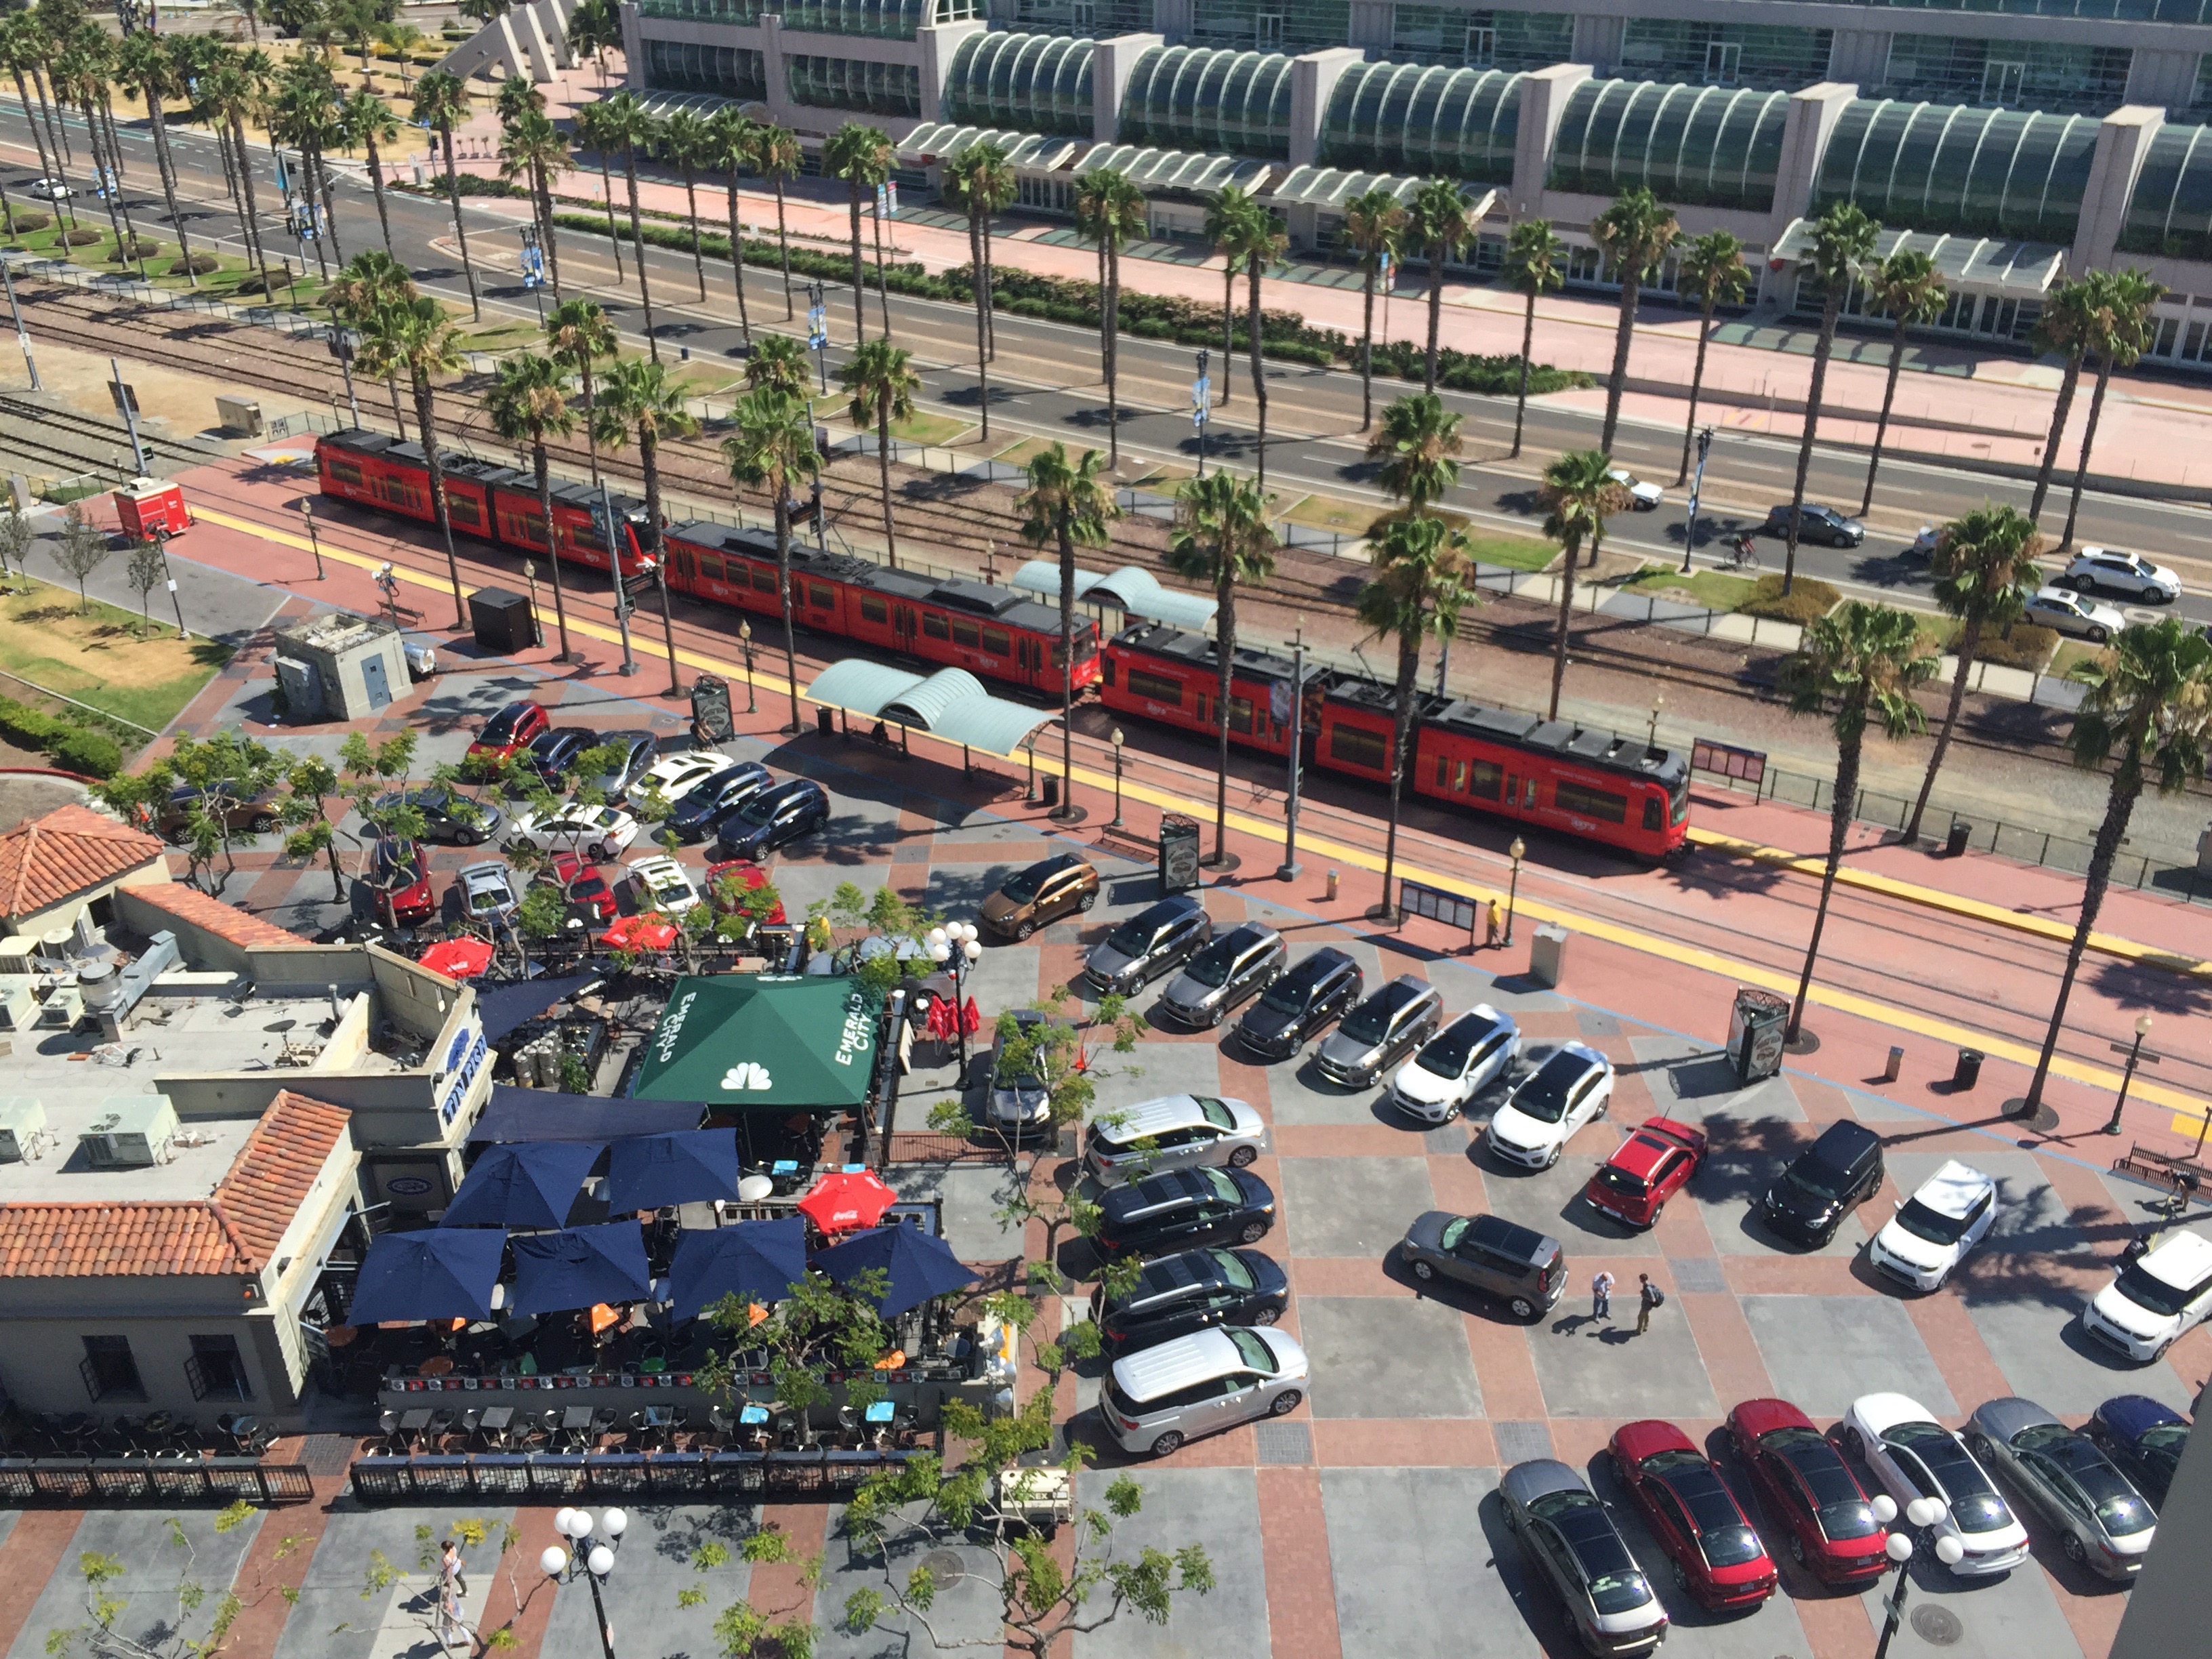 Kia Ride & Drive Event in San Diego